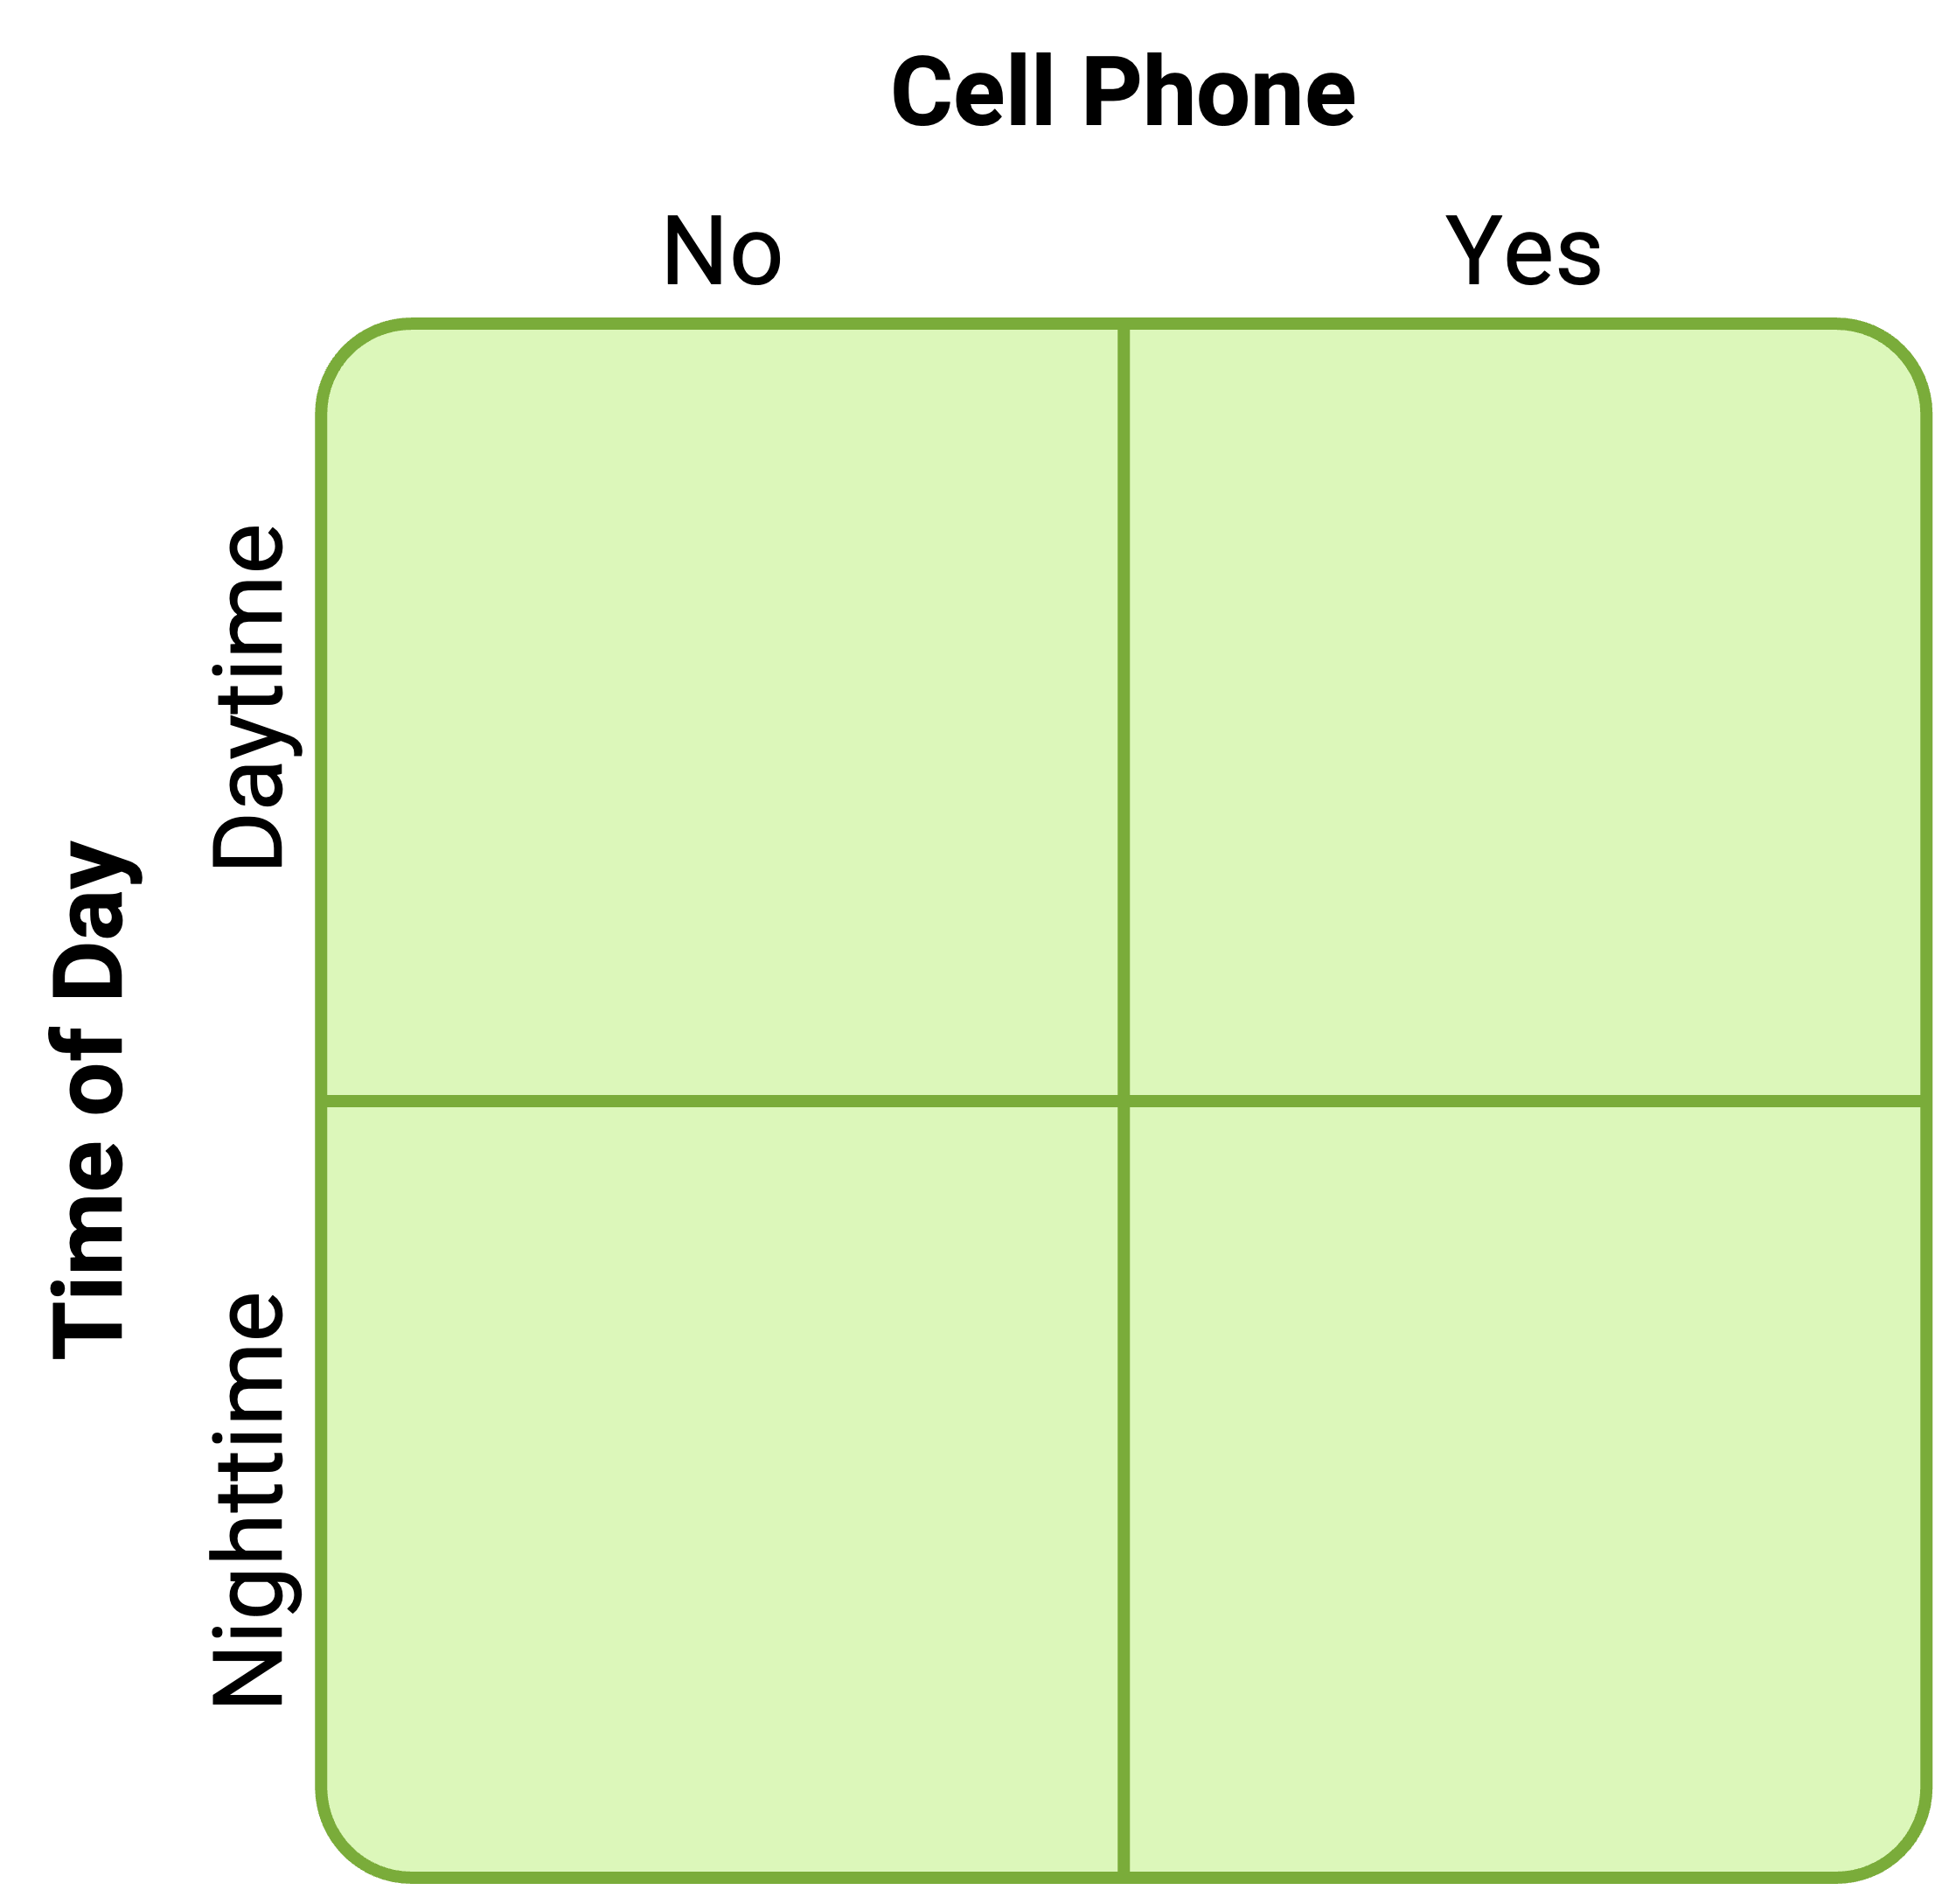 Factorial design table representing a 2 x 2 factorial design.